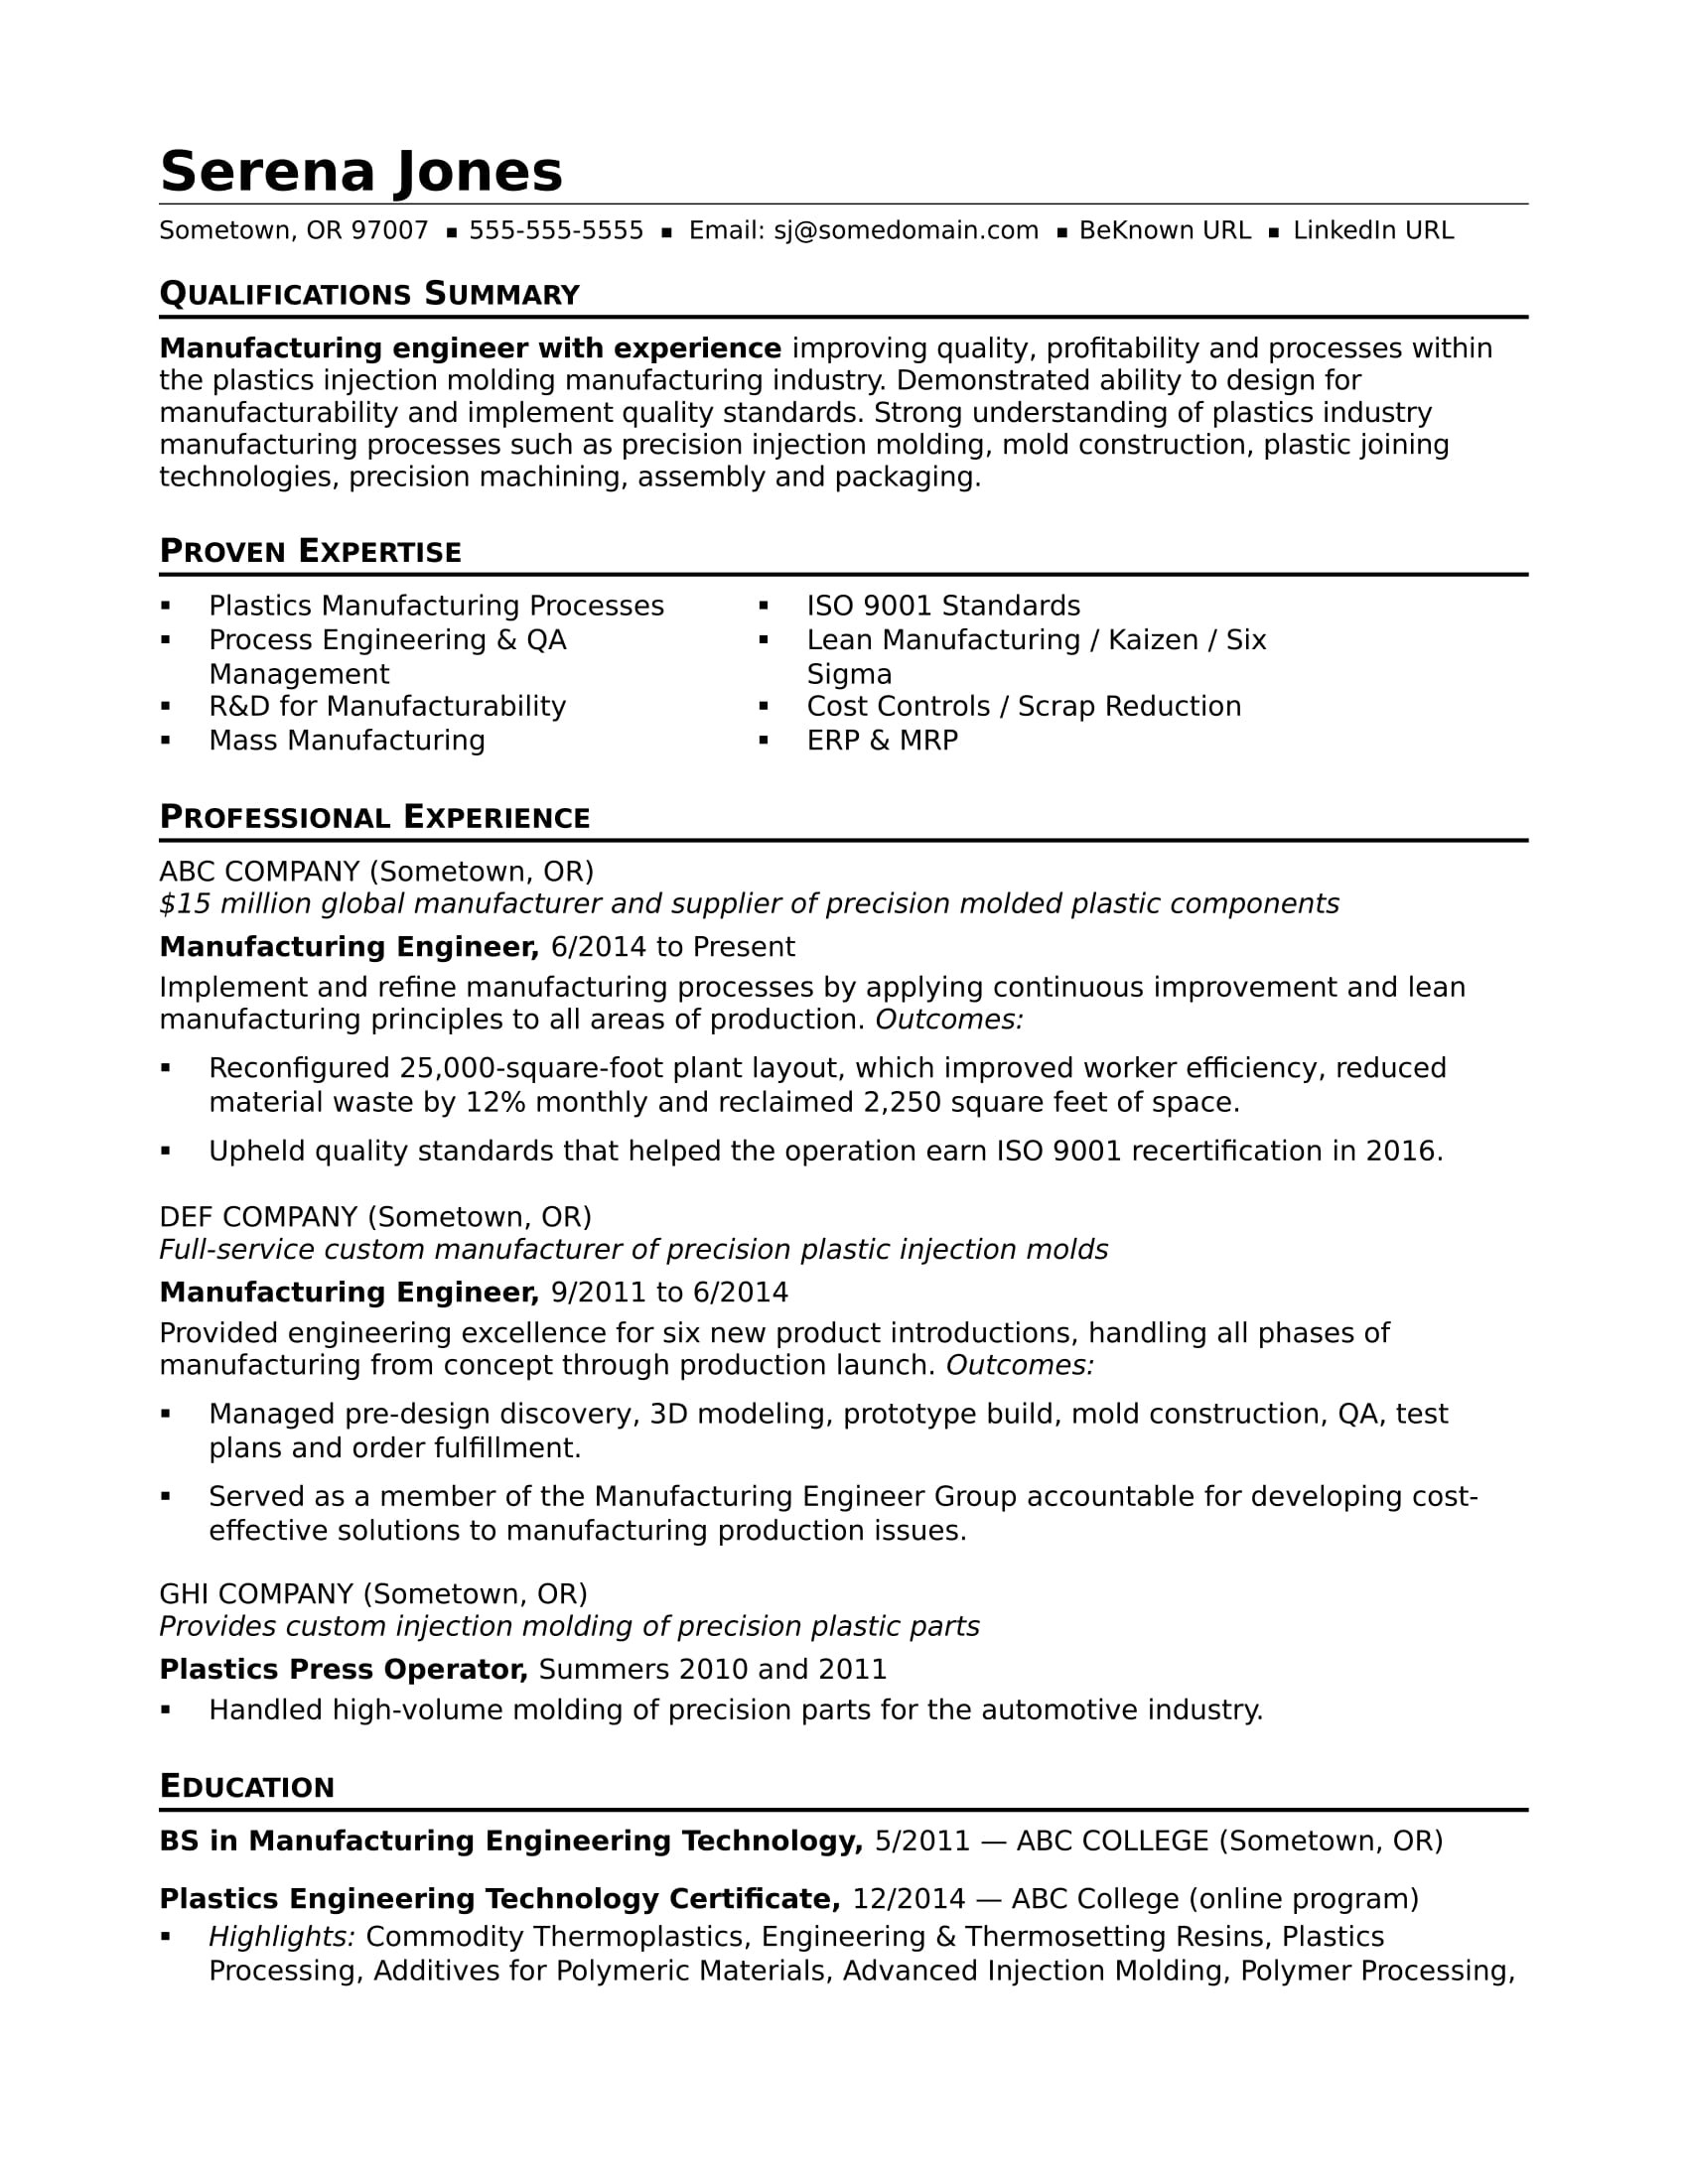 Sample Resume Objectives for Industrial Jobs Manufacturing Engineer Resume Sample Monster.com